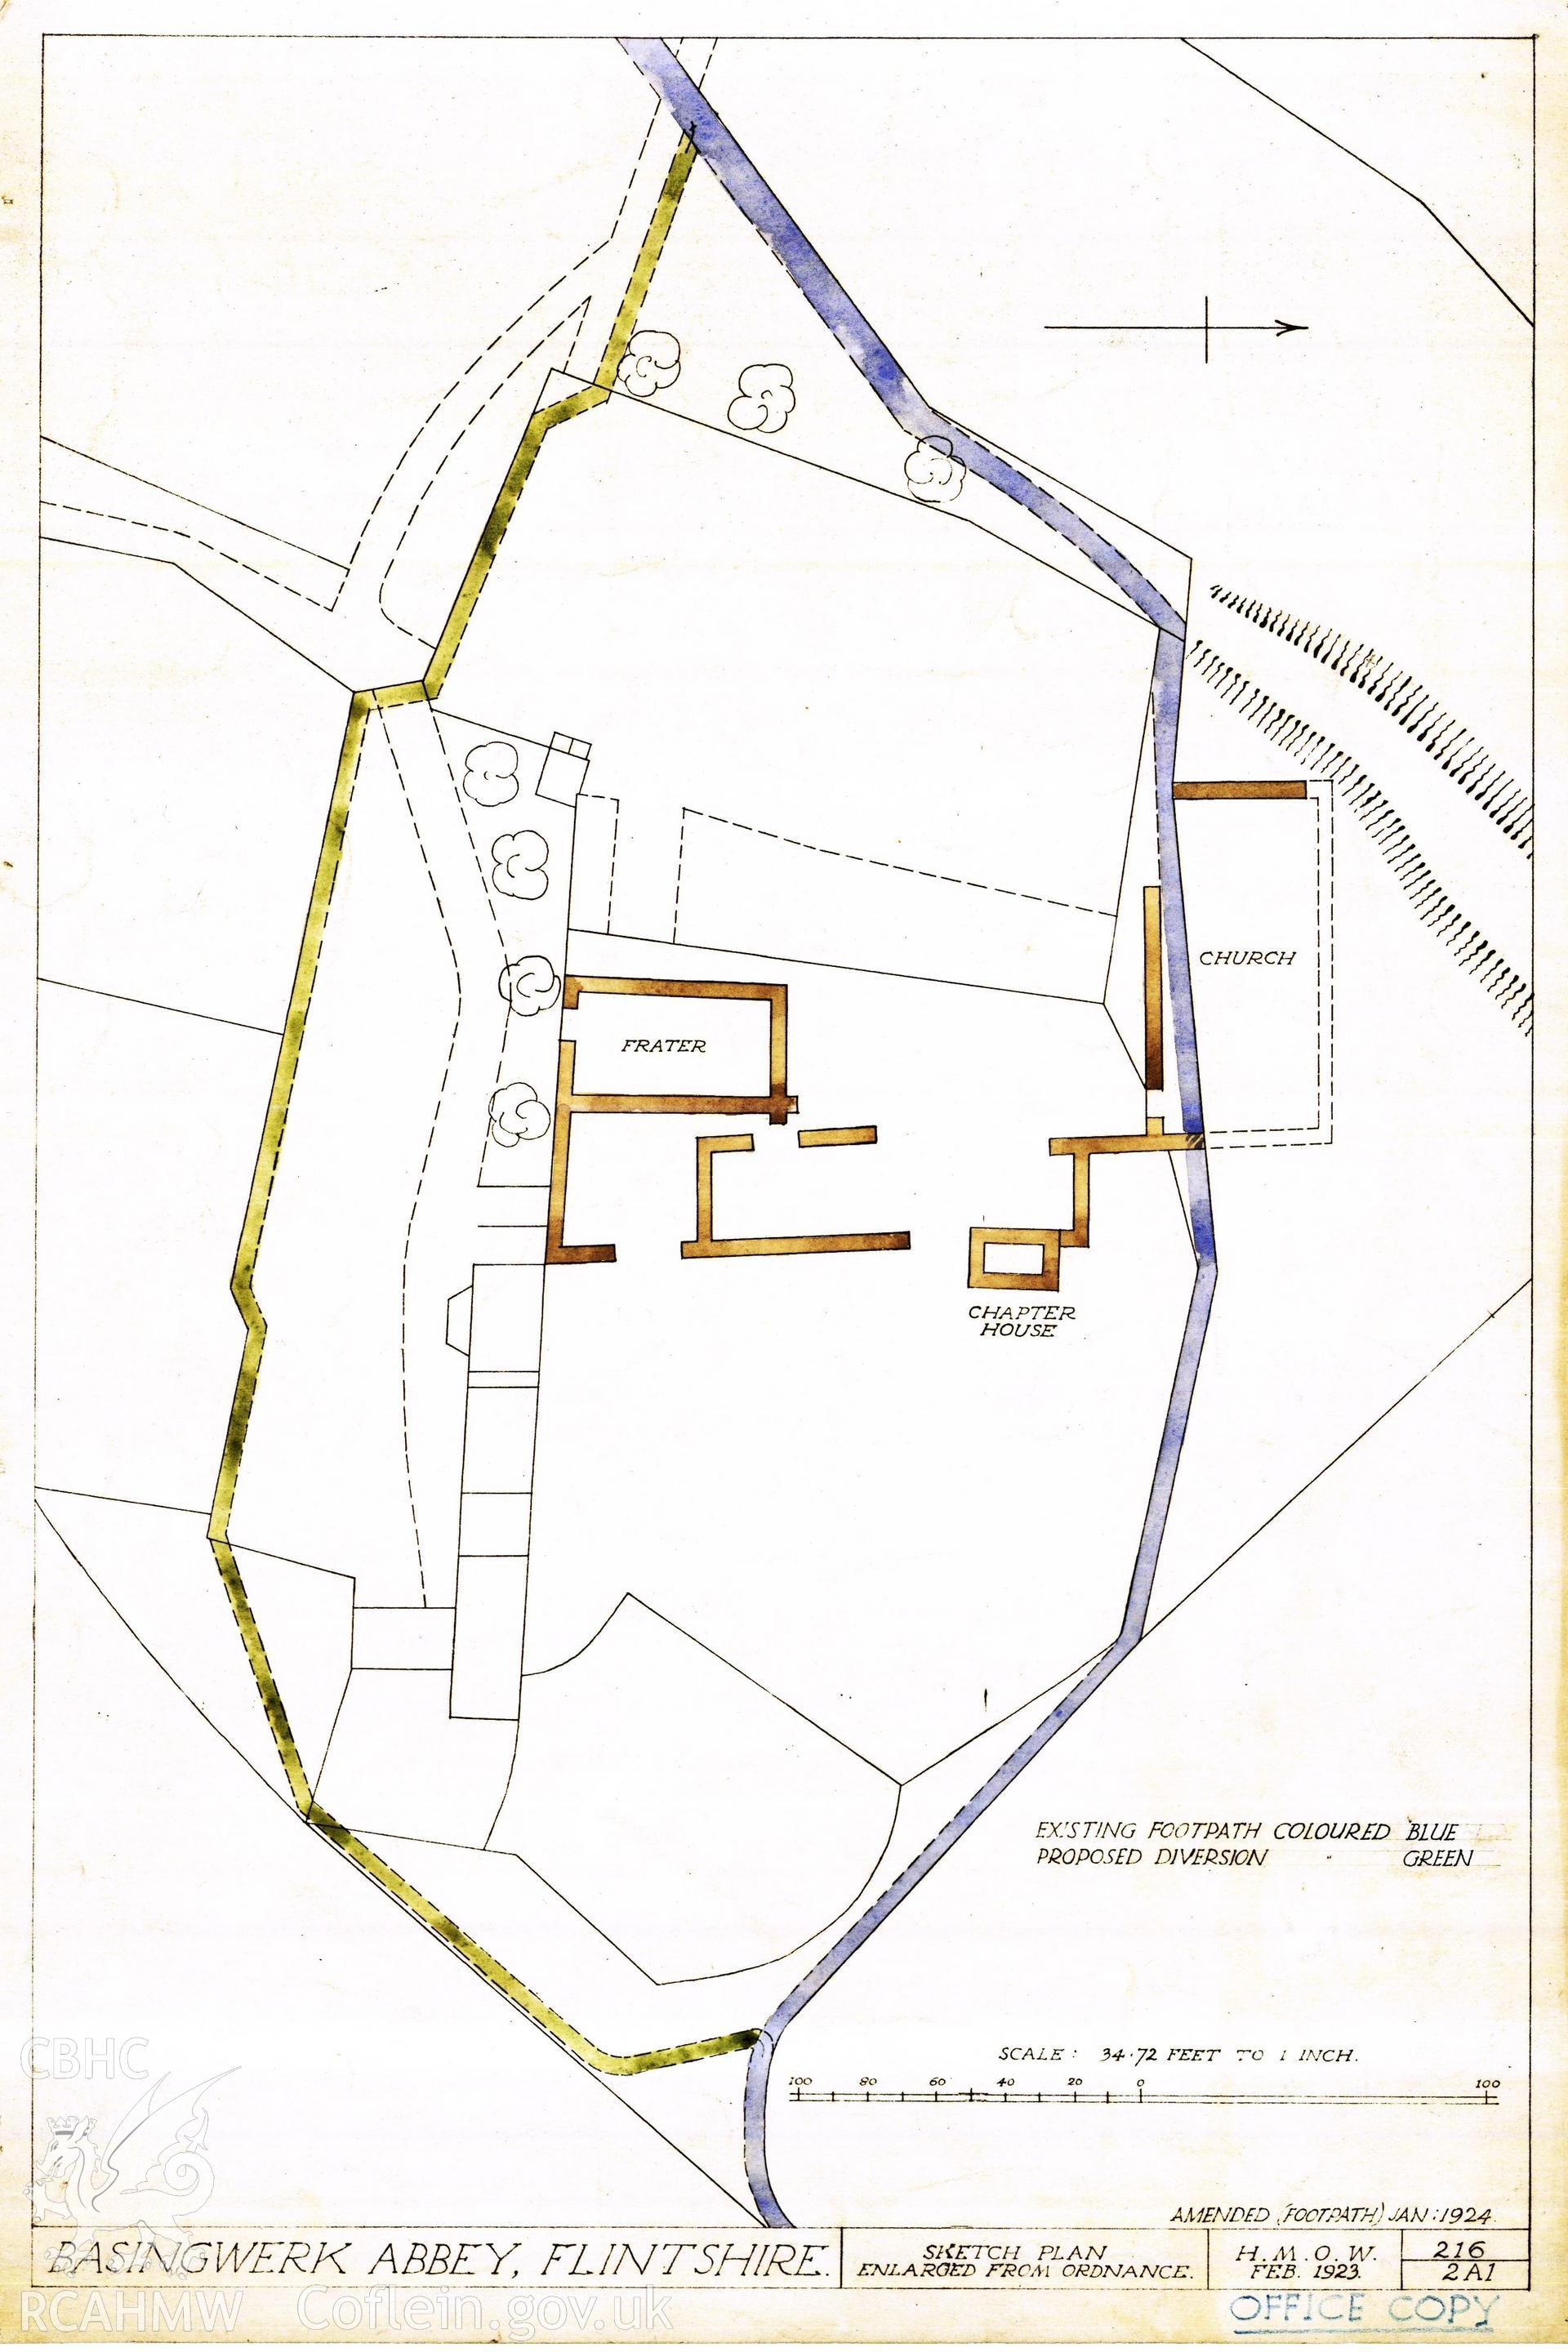 Cadw guardianship monument drawing of Basingwerk. Sketchplan, Jan. footpaths + walls. Cadw Ref. No:216/2A1. Scale 1:416.64.